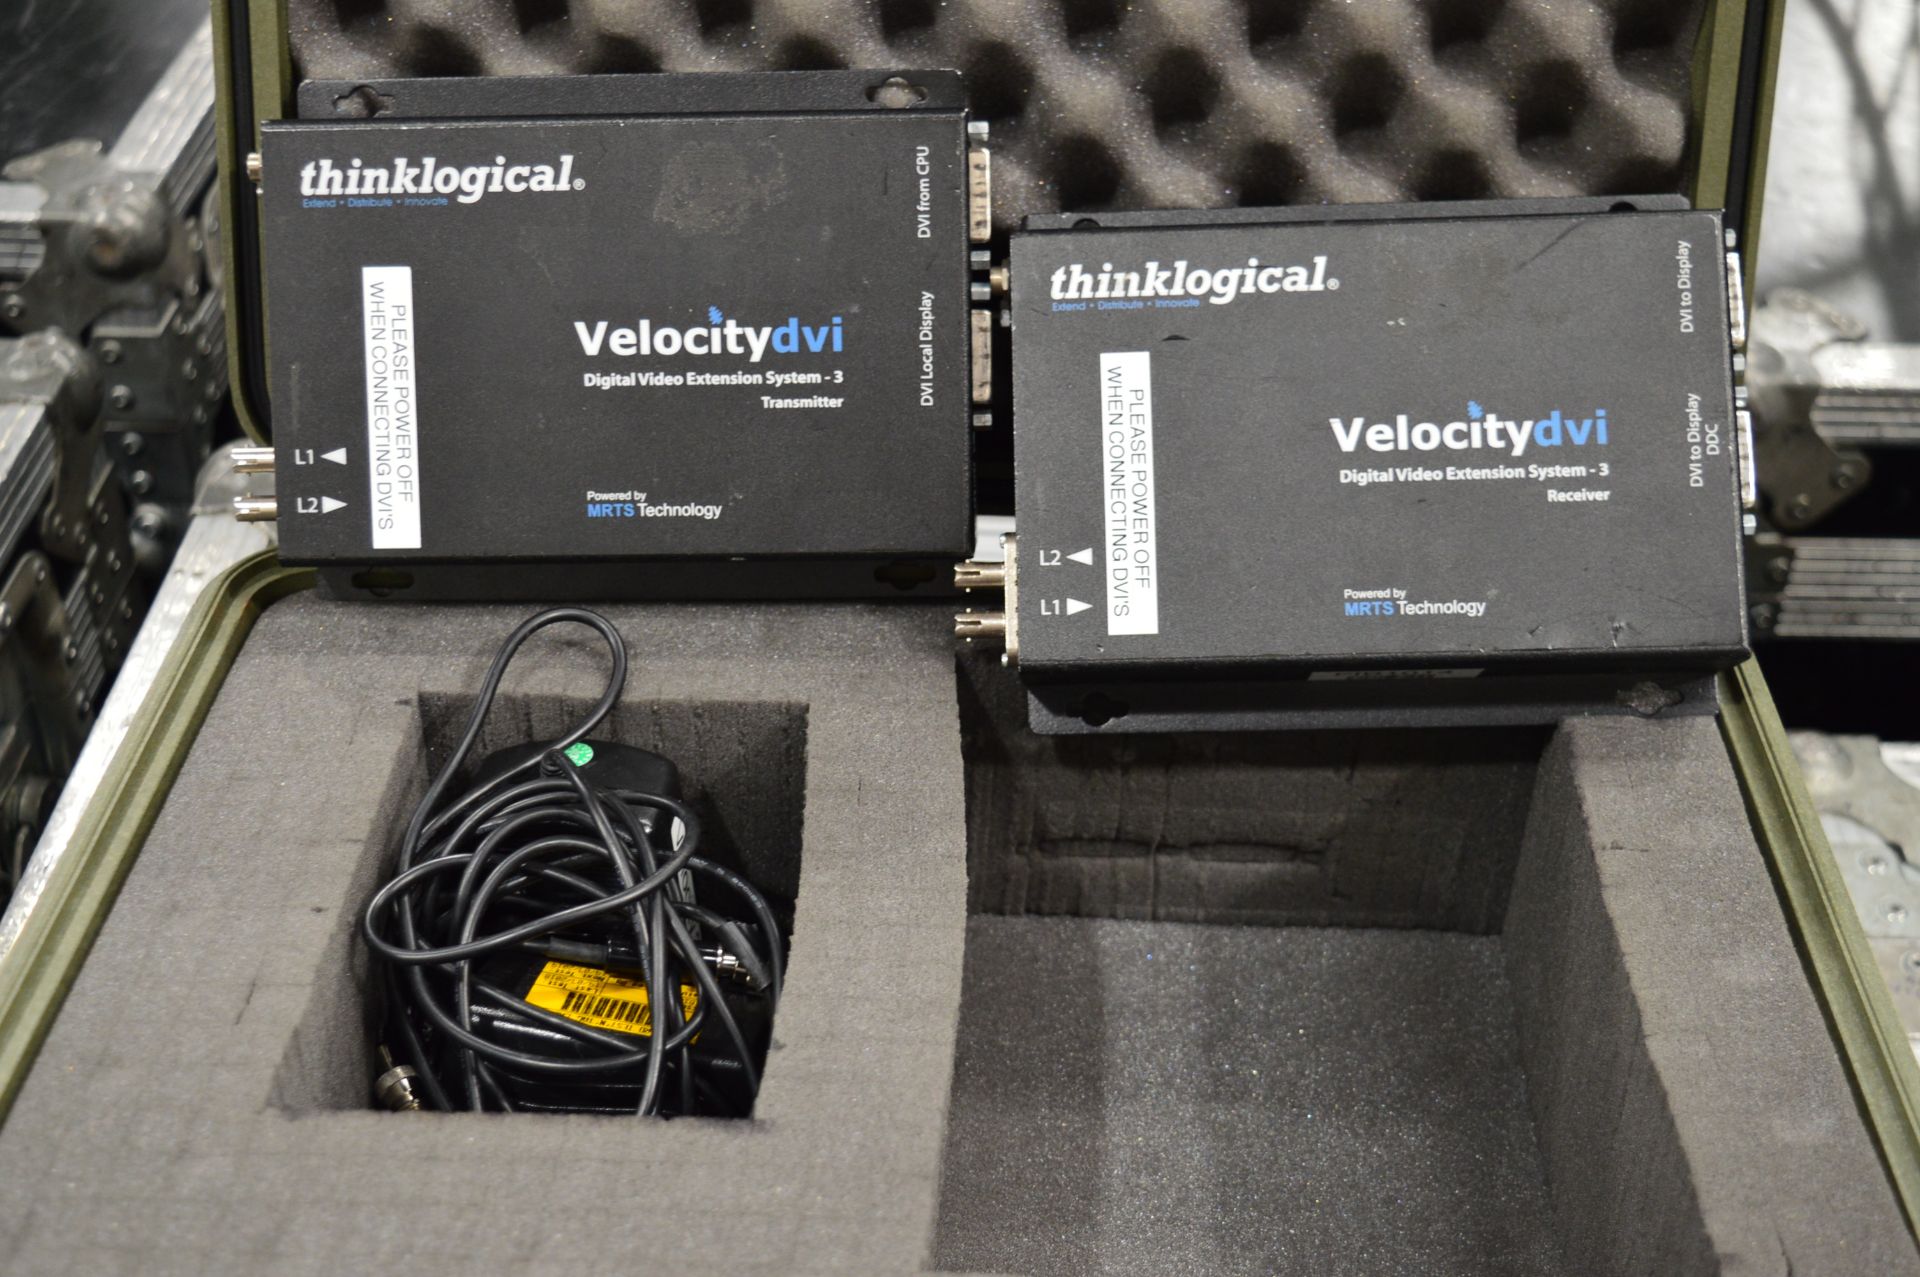 Velocity 3 digital video extension kit comprising 2x No. Think Logic, Velocity 3 digital video - Image 2 of 4